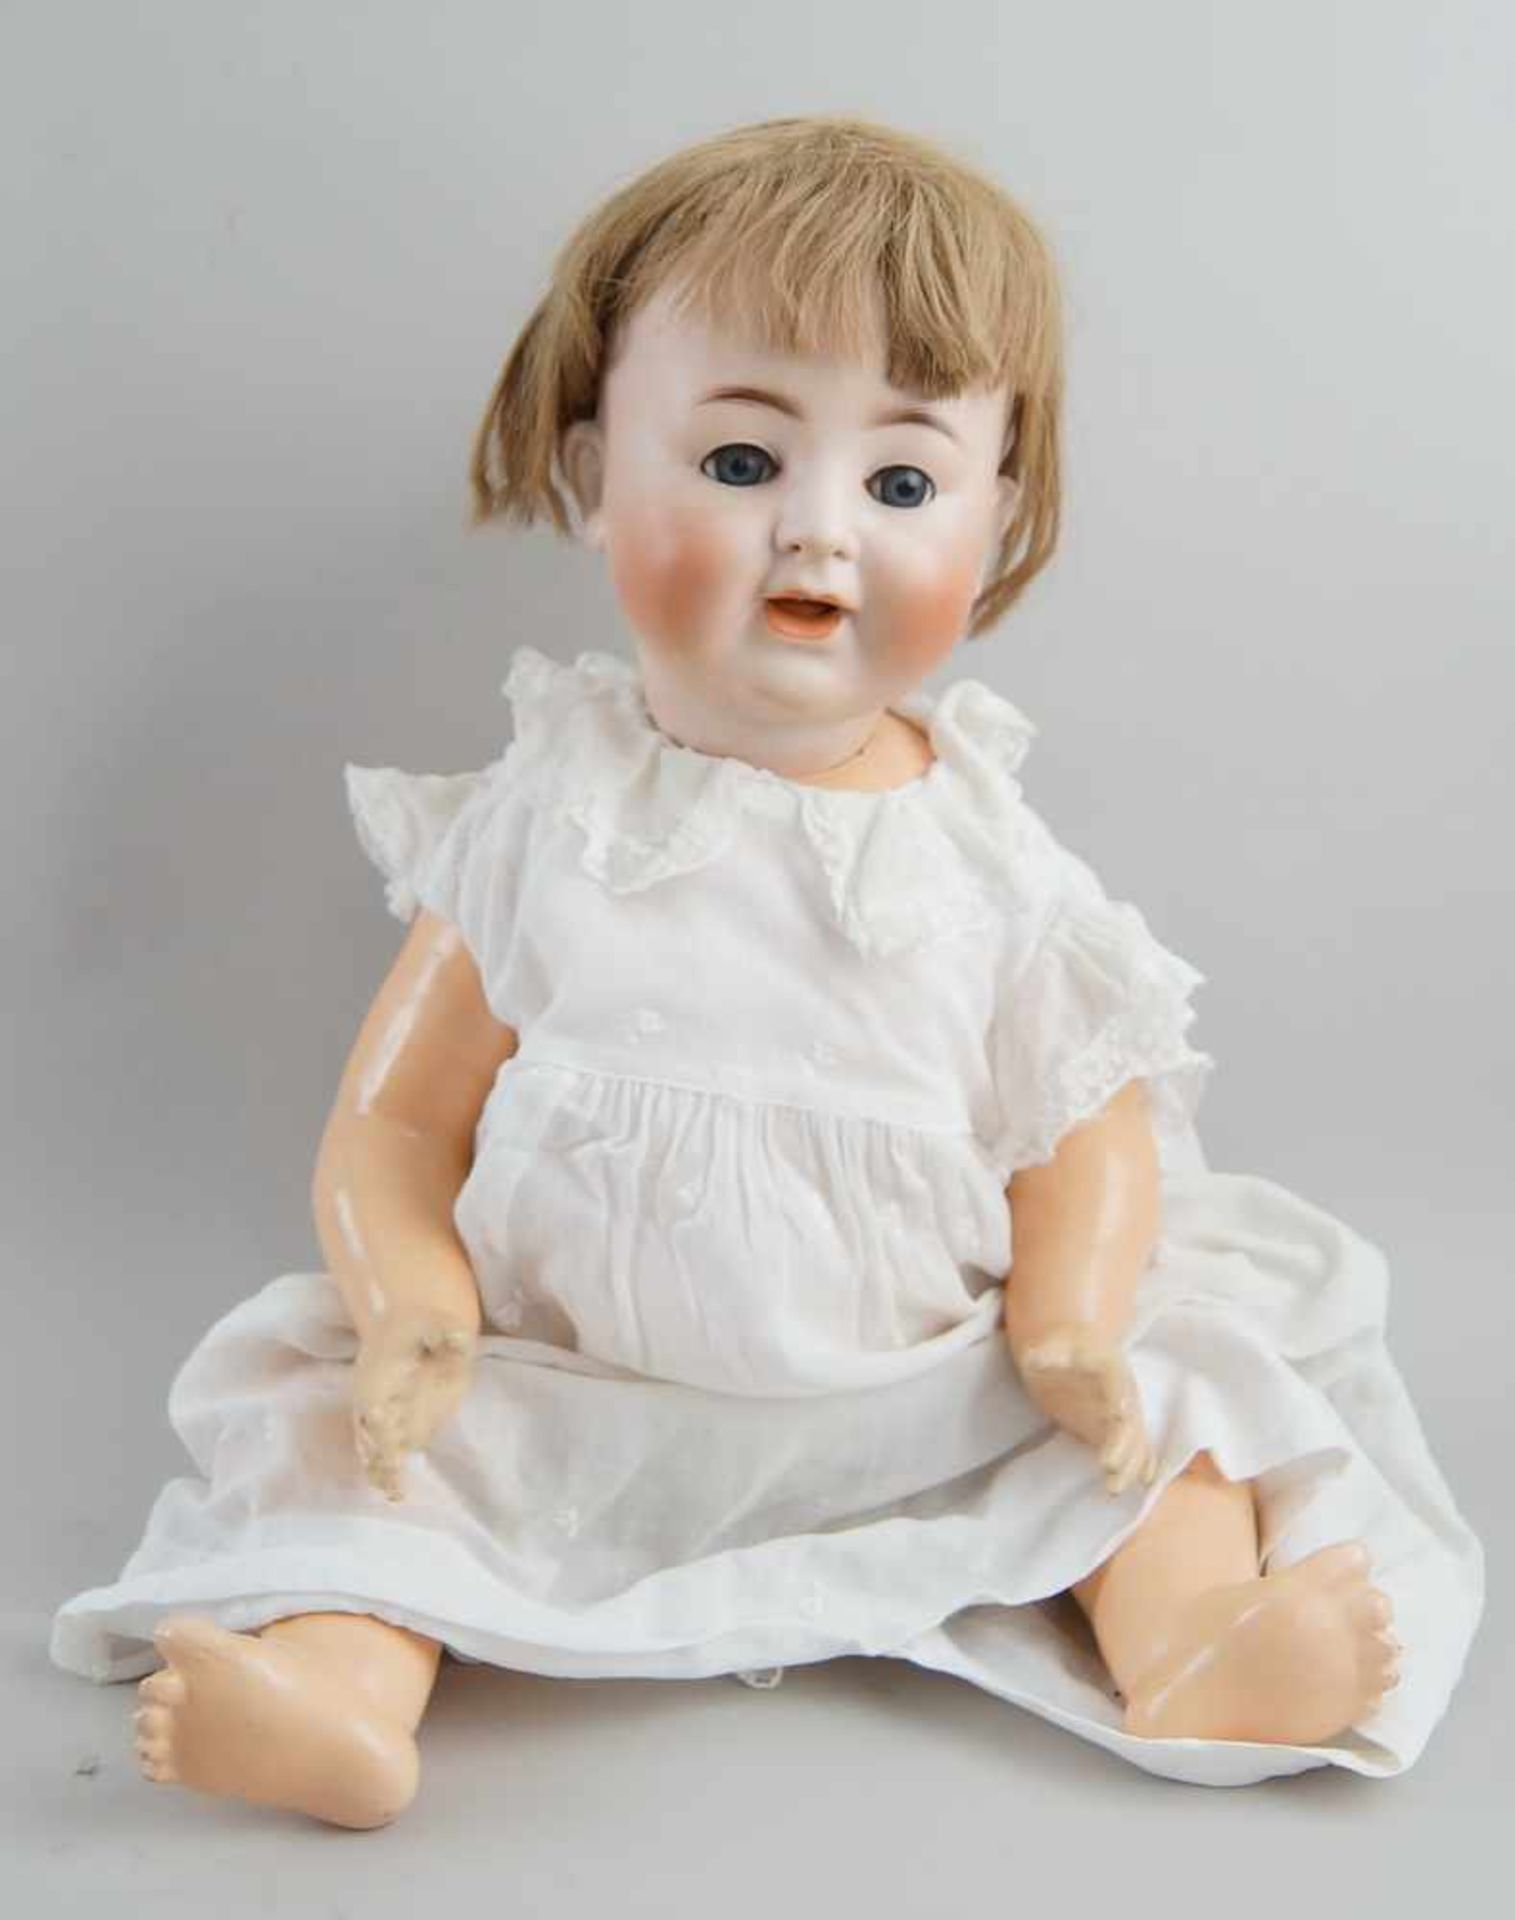 Puppe Alt Beck Gottschalck, 1361, ~ 1920, bespielt, 59cm- - -24.00 % buyer's premium on the hammer